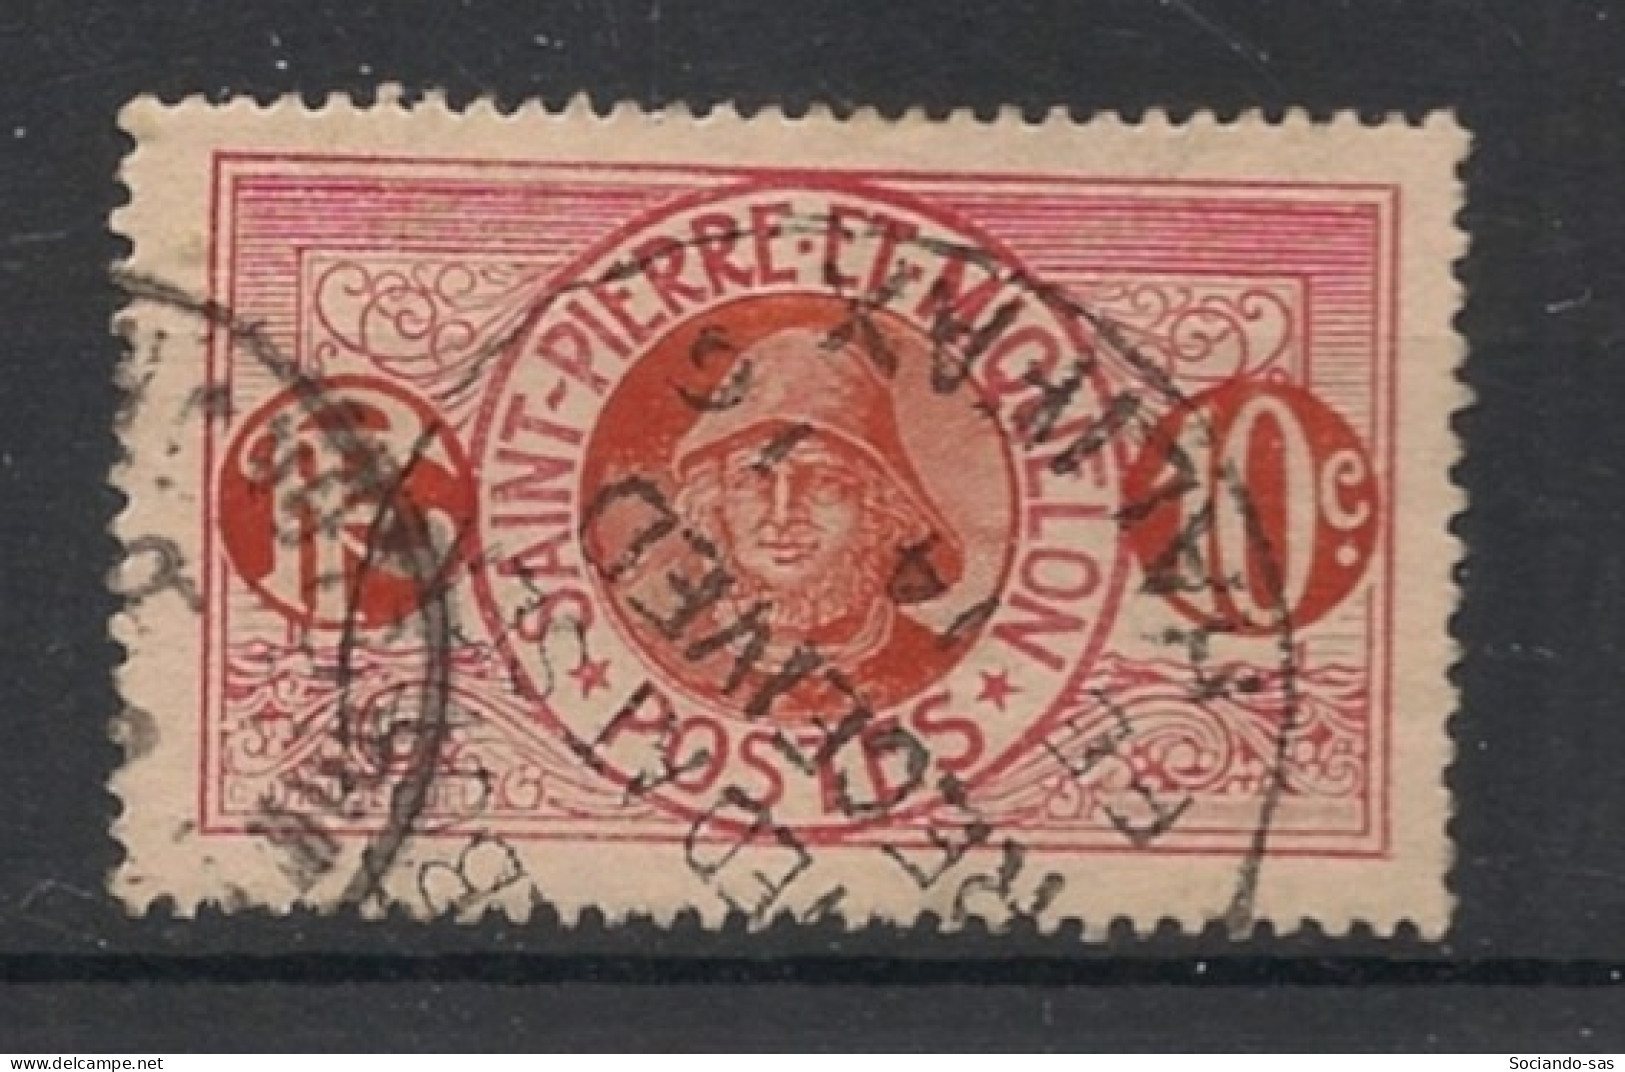 SPM - 1909-17 - N°YT. 82 - Pêcheur 10c Rouge - Oblitération PAQUEBOT / Used - Used Stamps